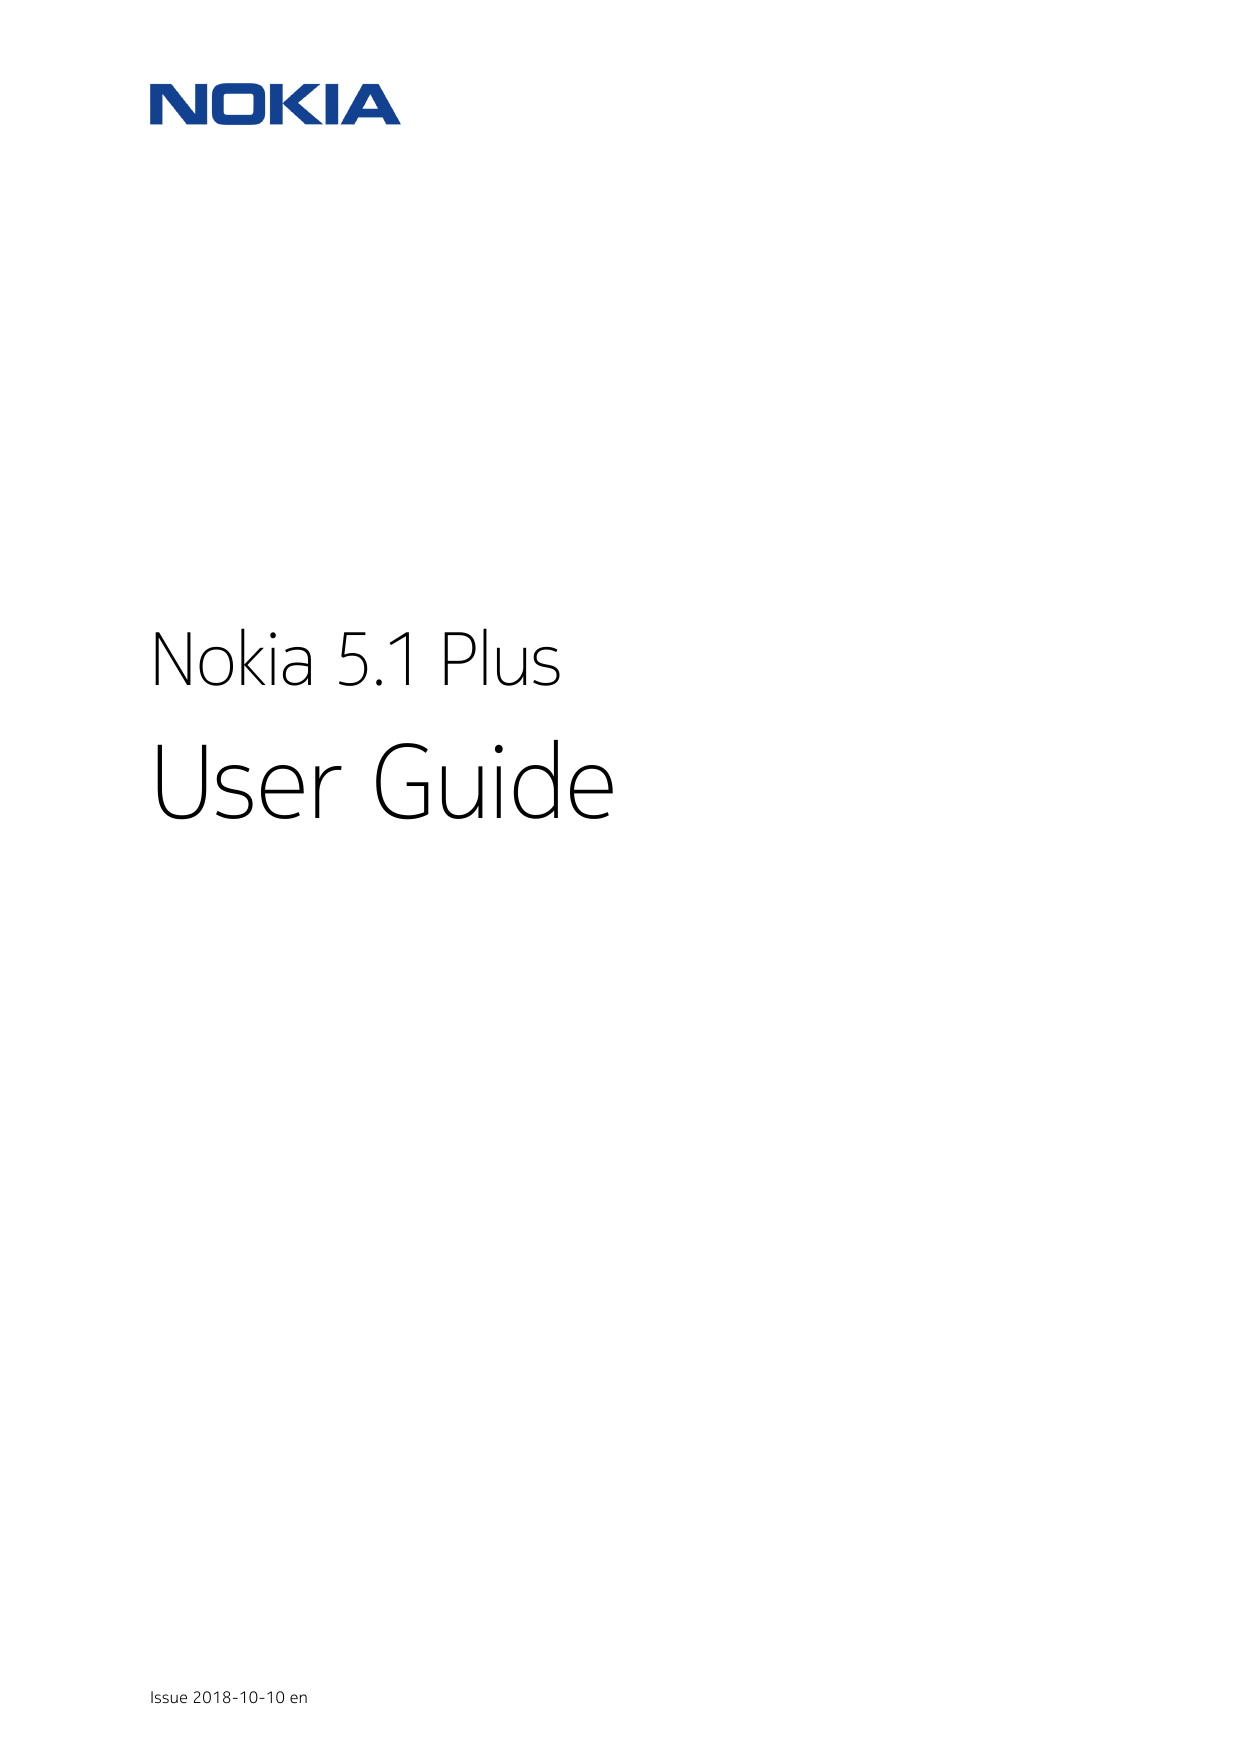 Nokia 5.1 PlusUser GuideIssue 2018-10-10 en